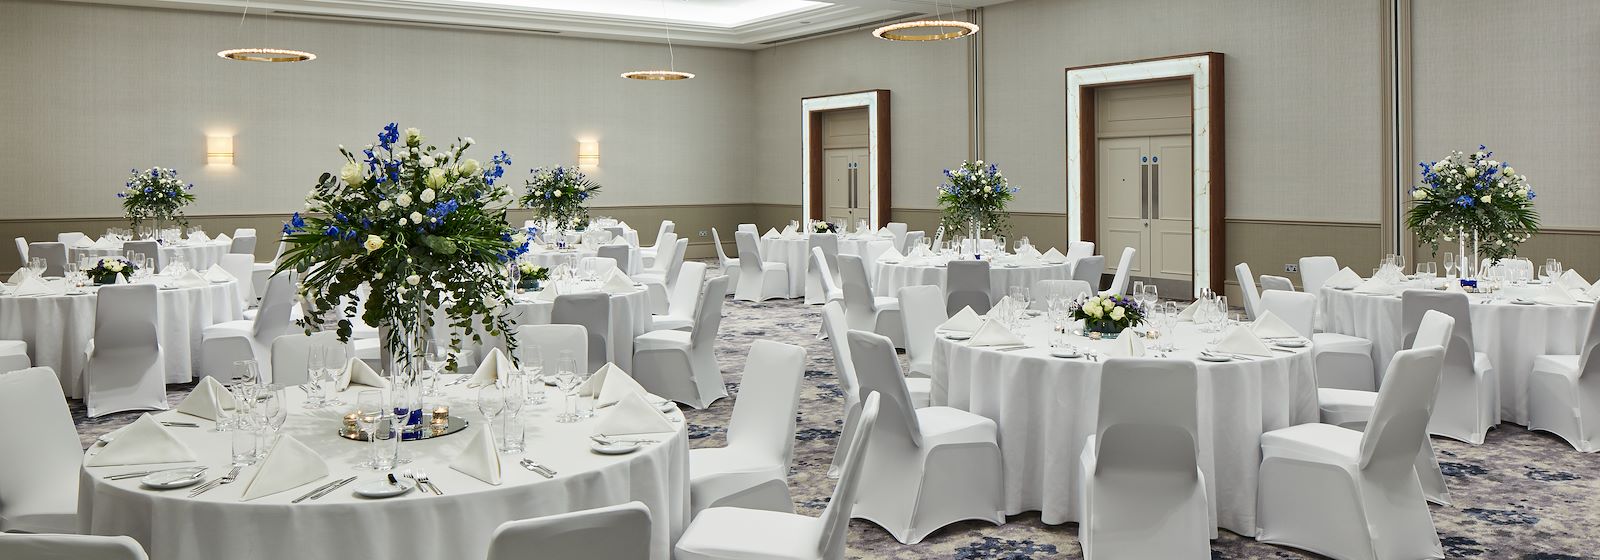 london marriott hotel west india quay wedding party venues